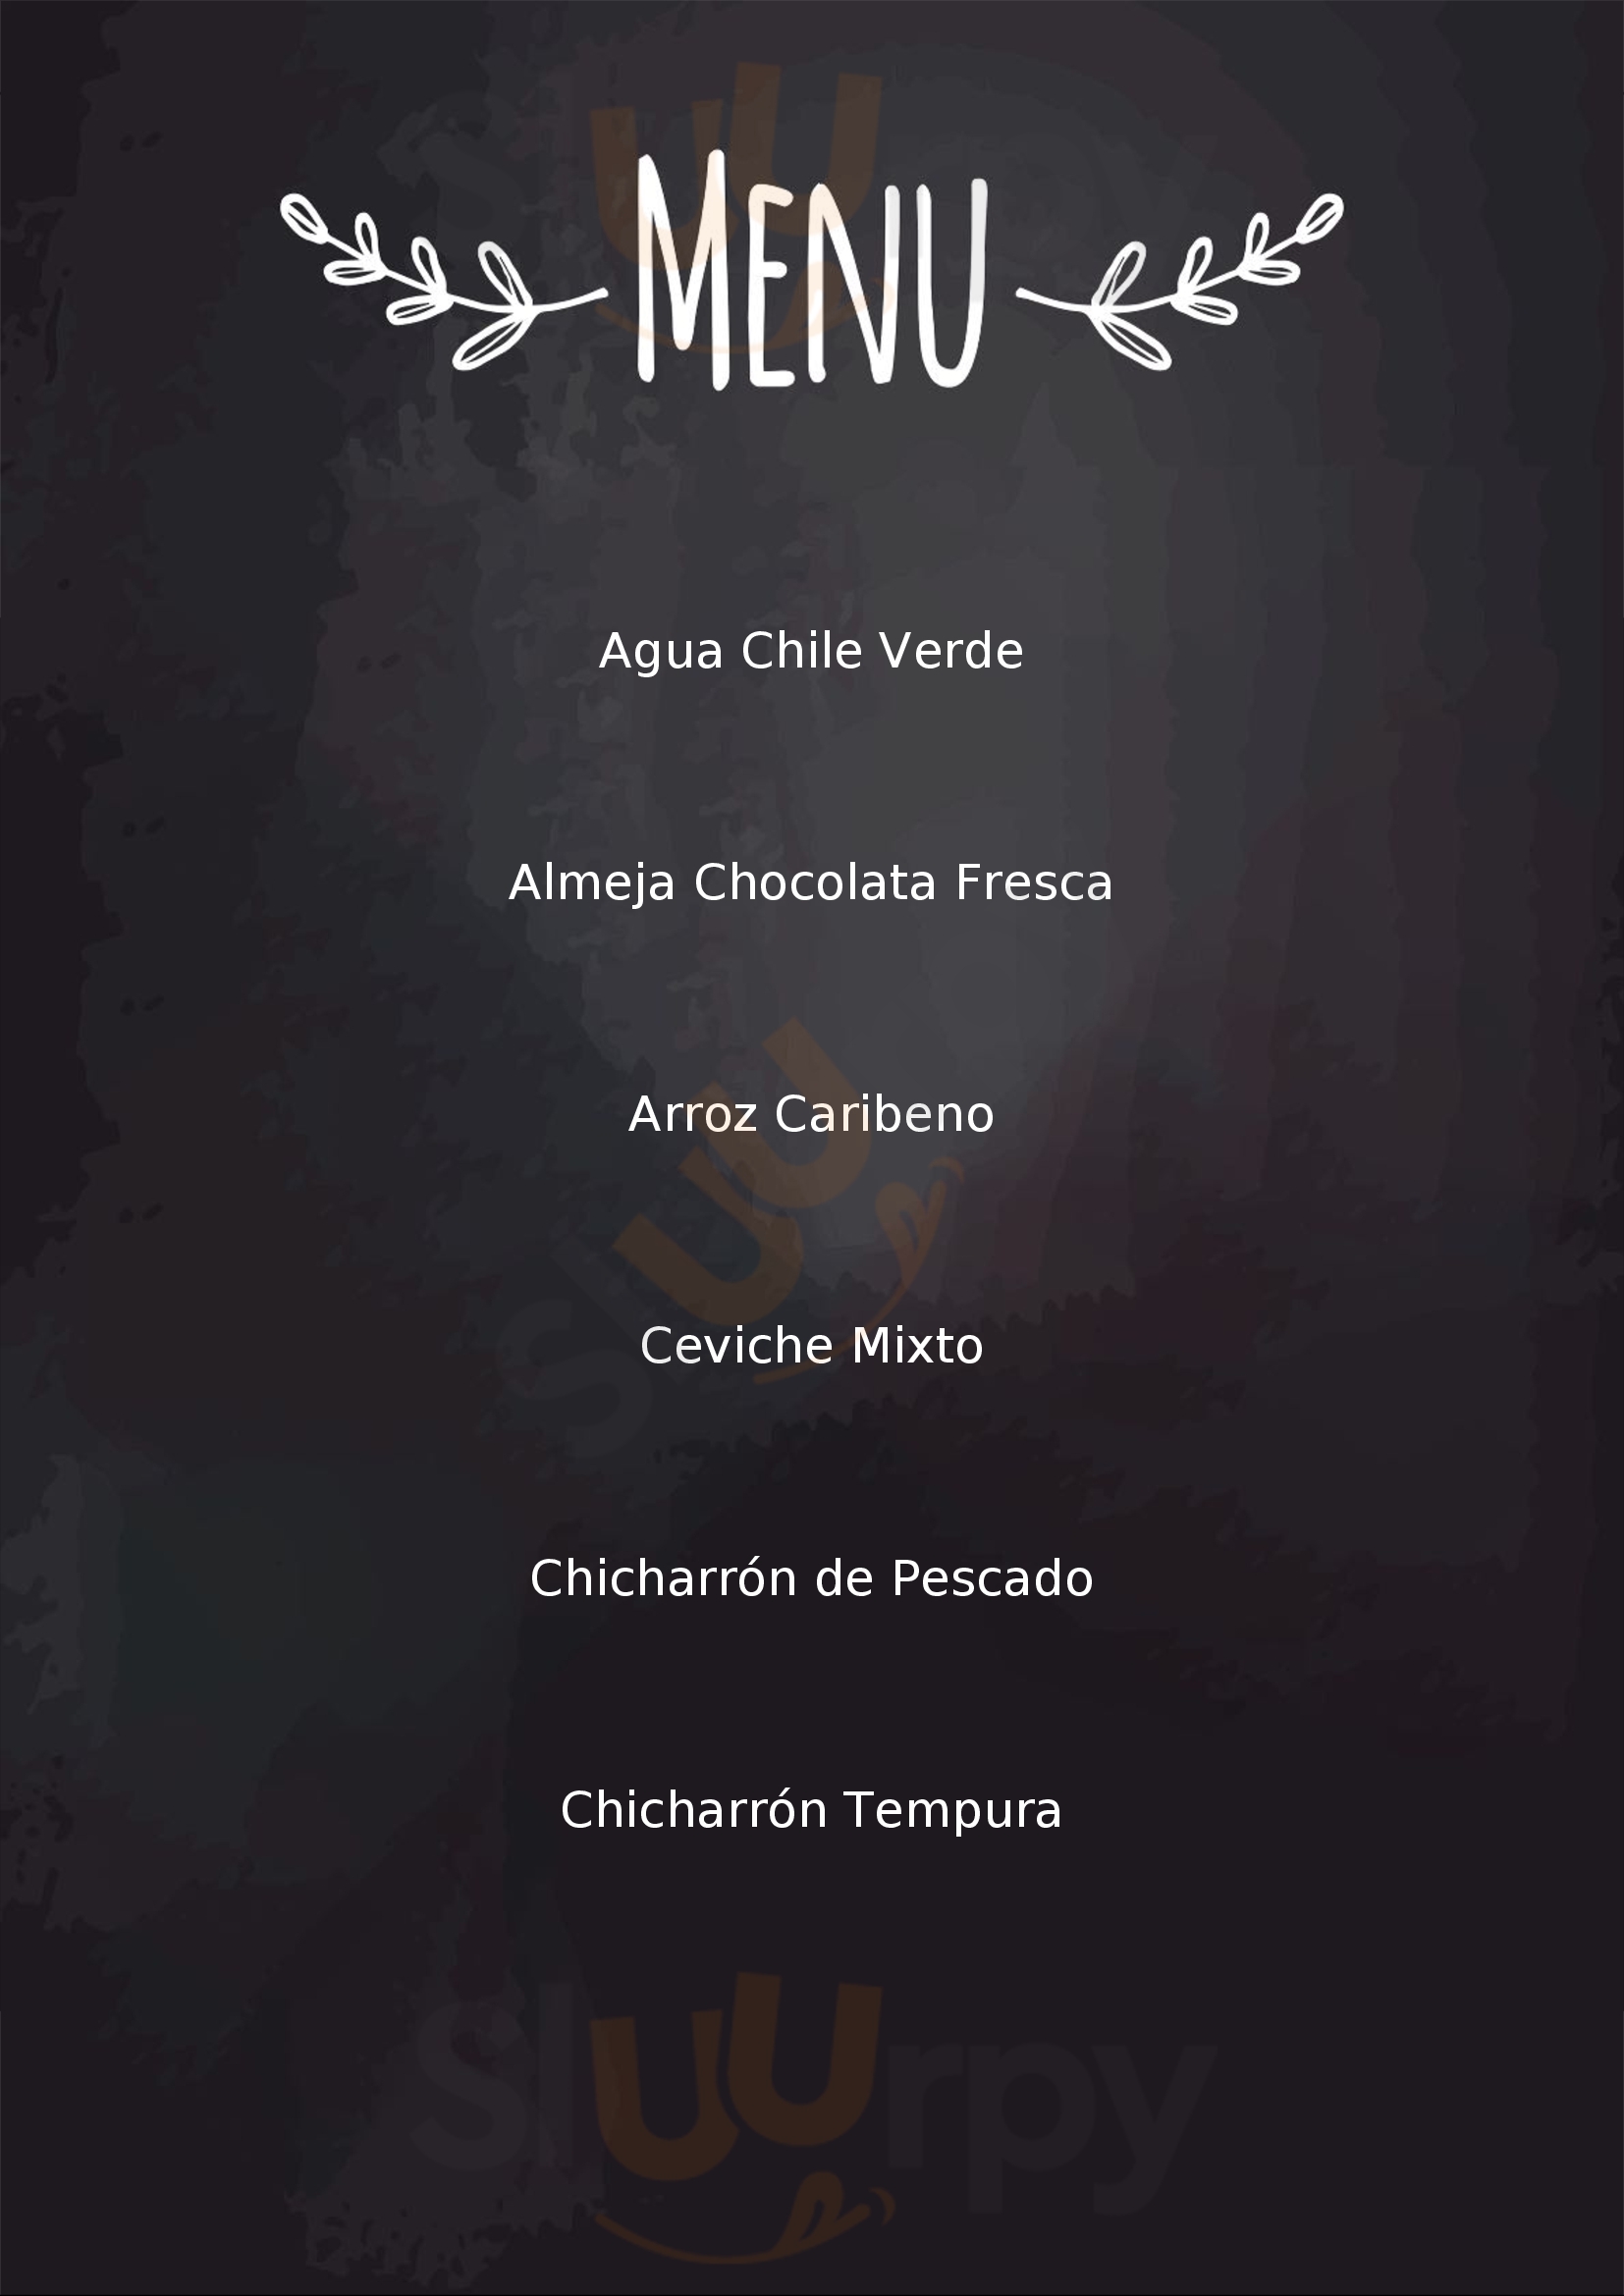 Mar-bella Rawbar & Grill Cancún Menu - 1